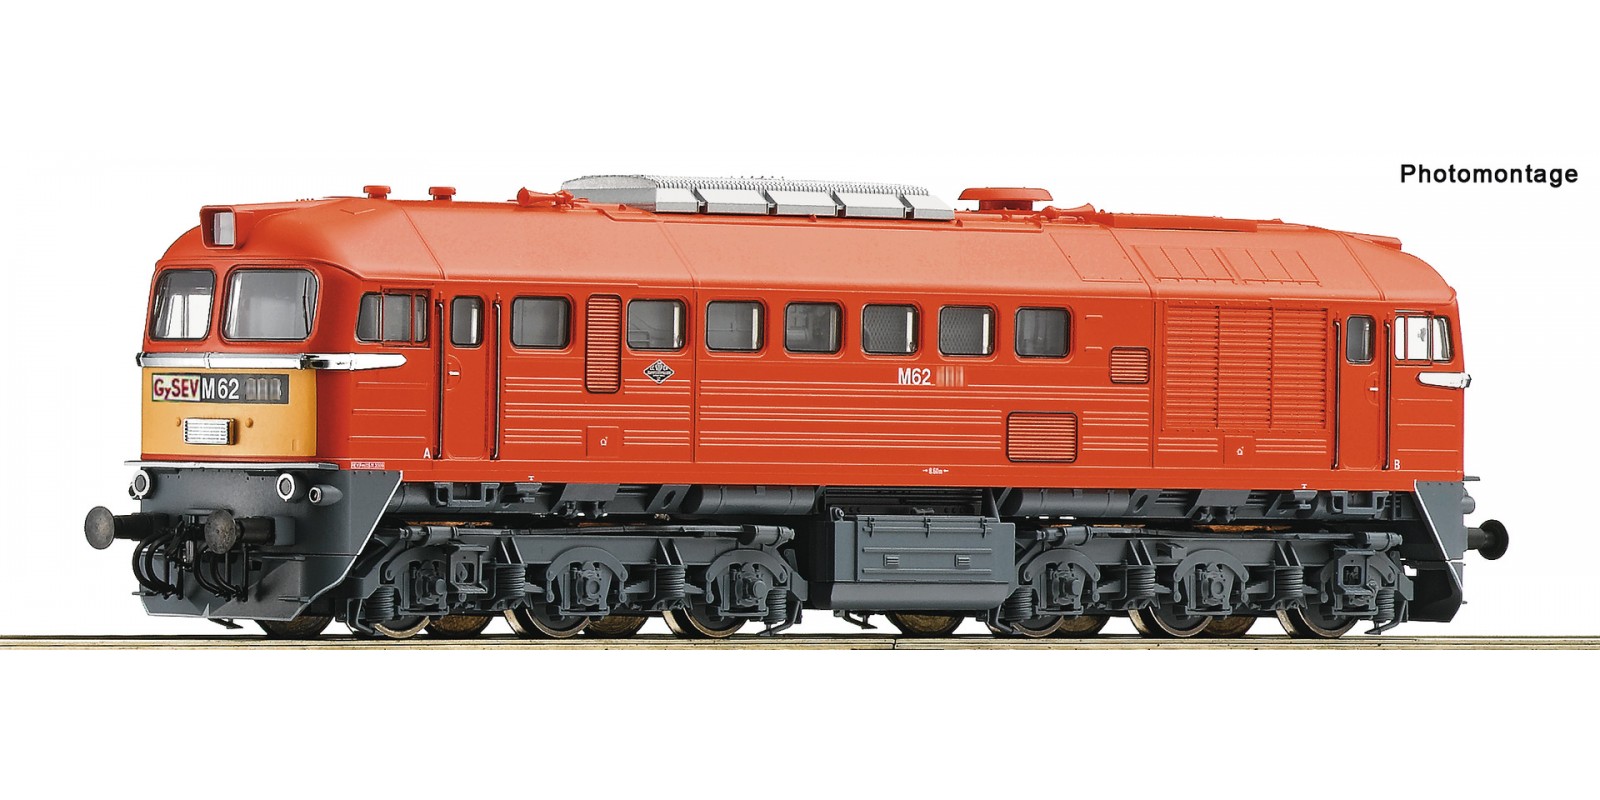 RO73243 - Diesel locomotive M62, GYSEV